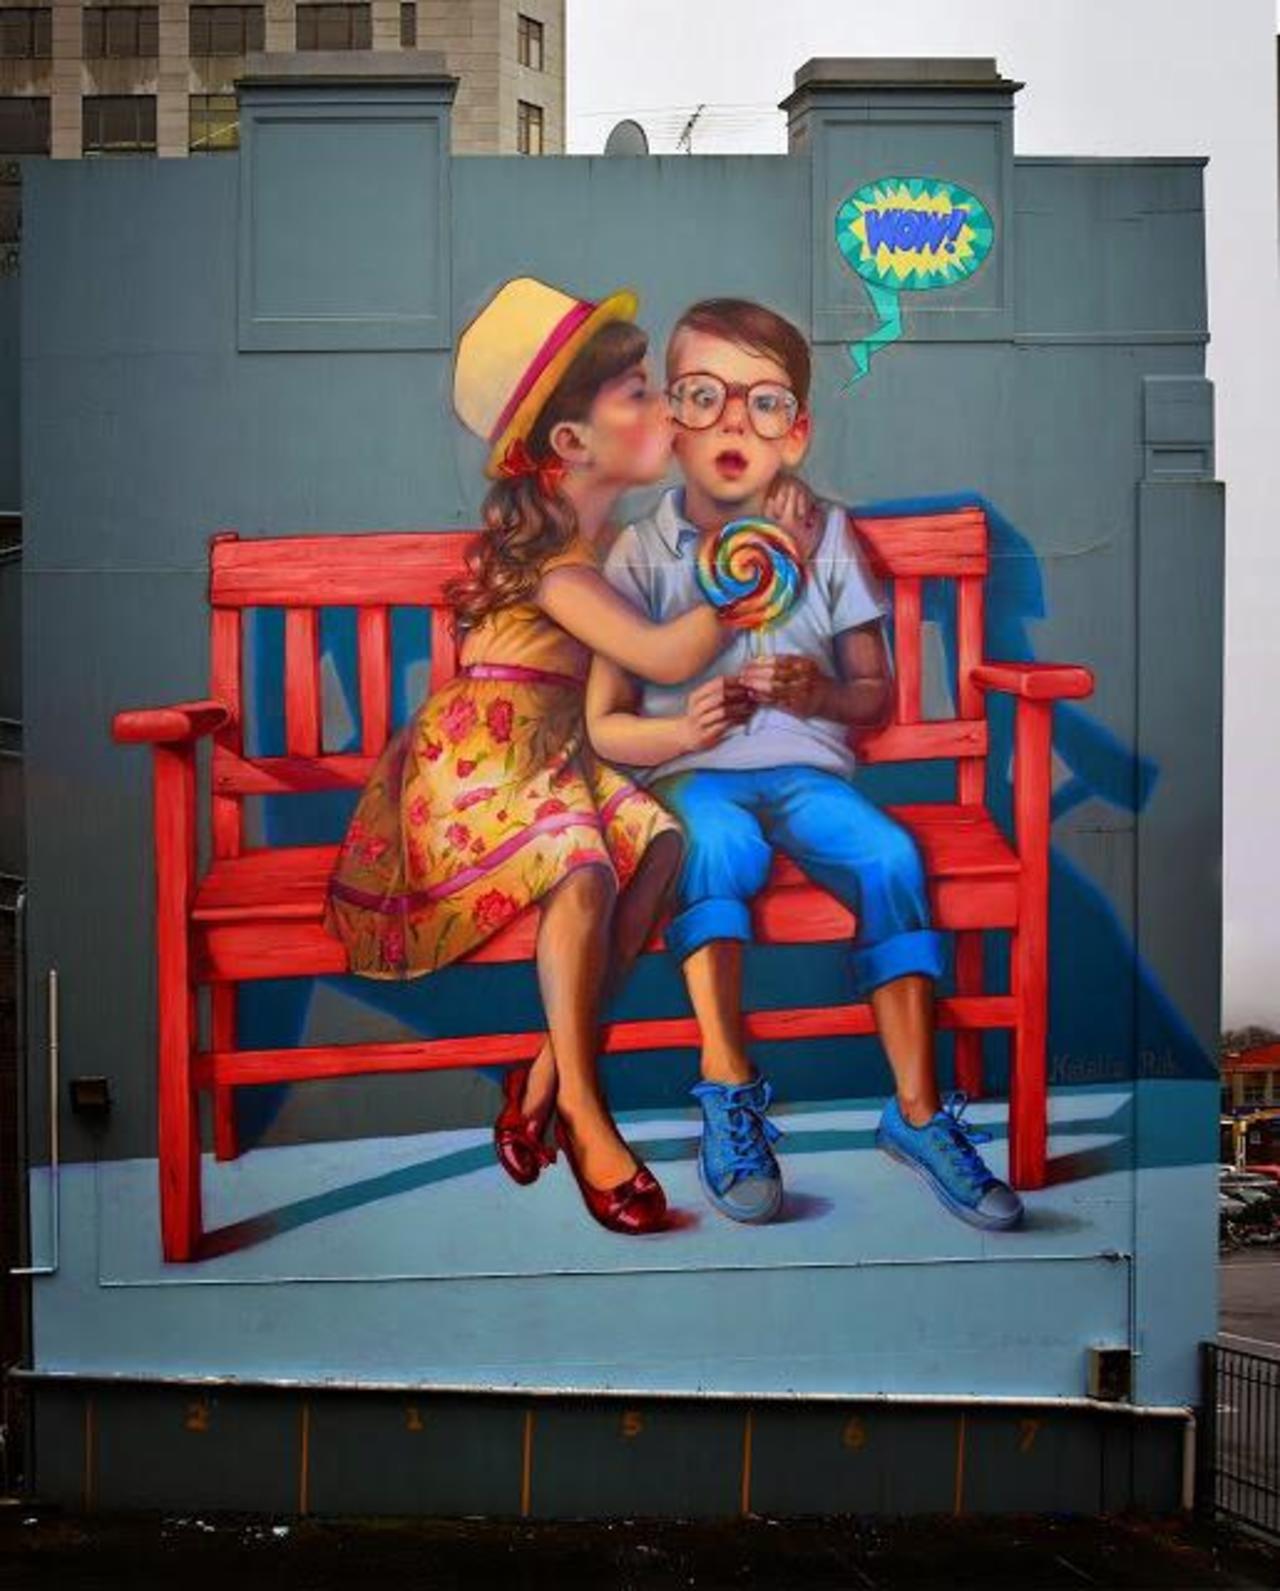 Natalia Rak 
New Zealand 
#StreetArt #art #mural #graffiti #love http://t.co/xh0lmhwMmc